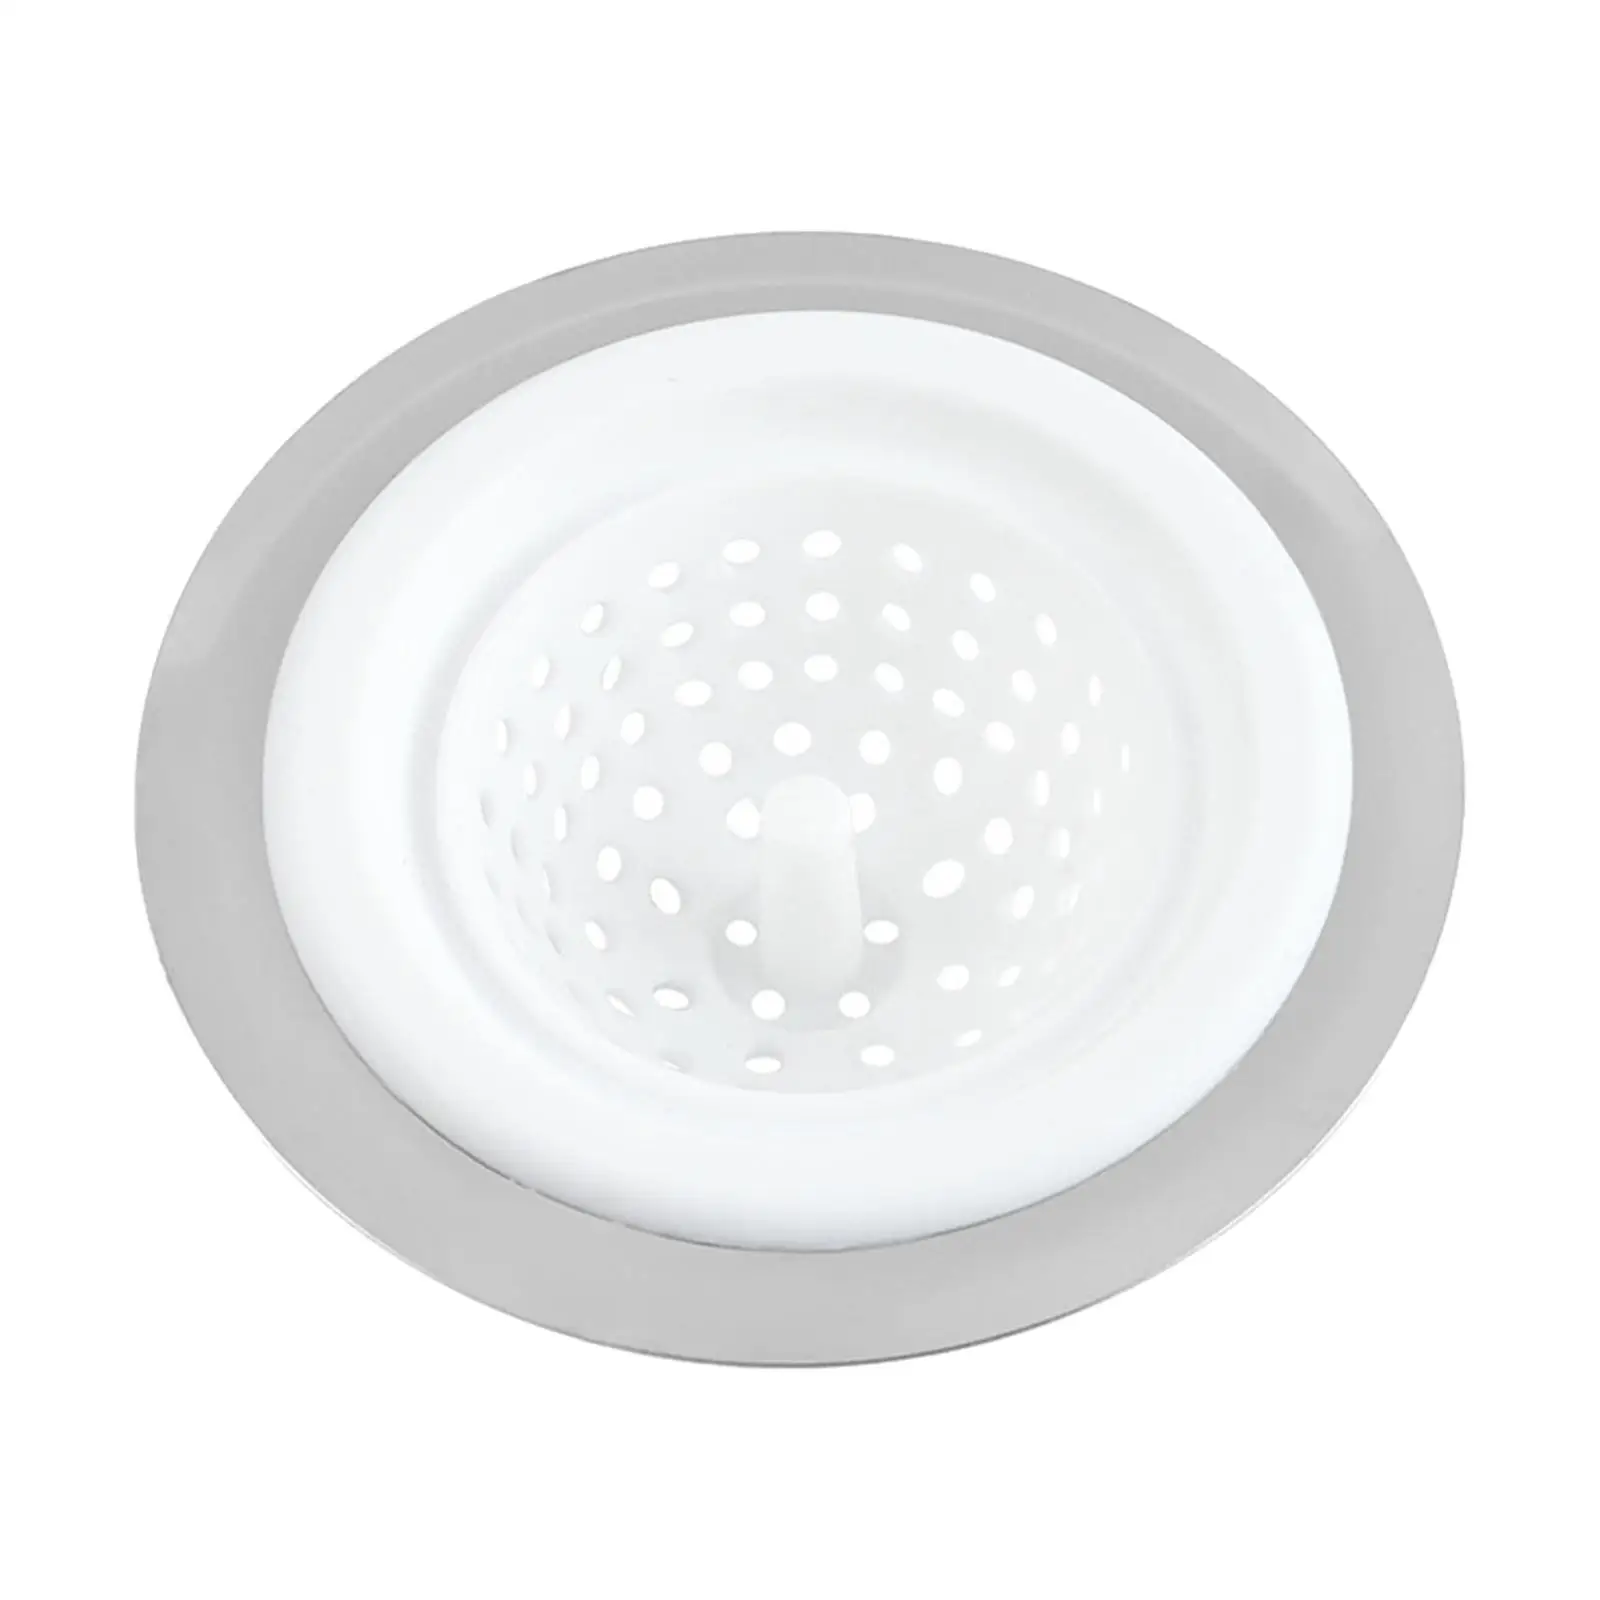 Drain Cover Silicone Filter, Kitchen Filter, Bathroom Wash Basin Drain Bath Stopper Plug for Shower Accessories